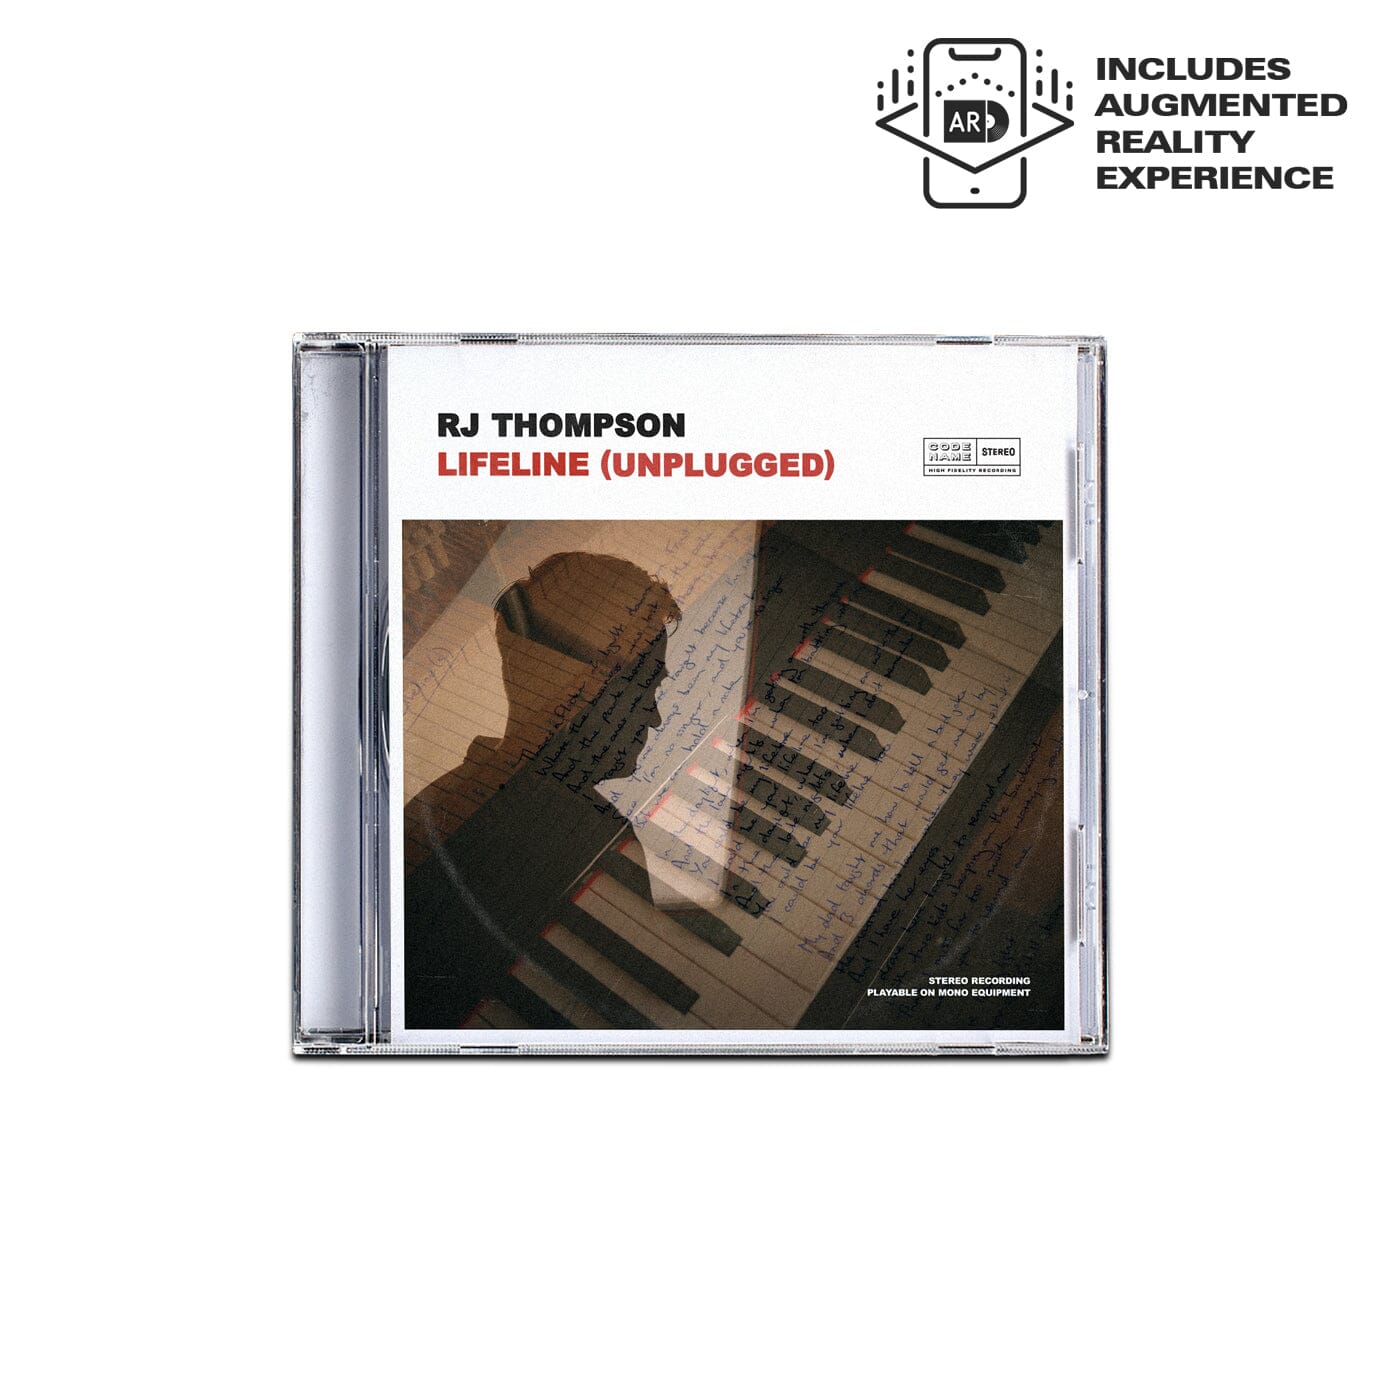 Lifeline (Unplugged) - CD | RJ Thompson | Official Website & Store